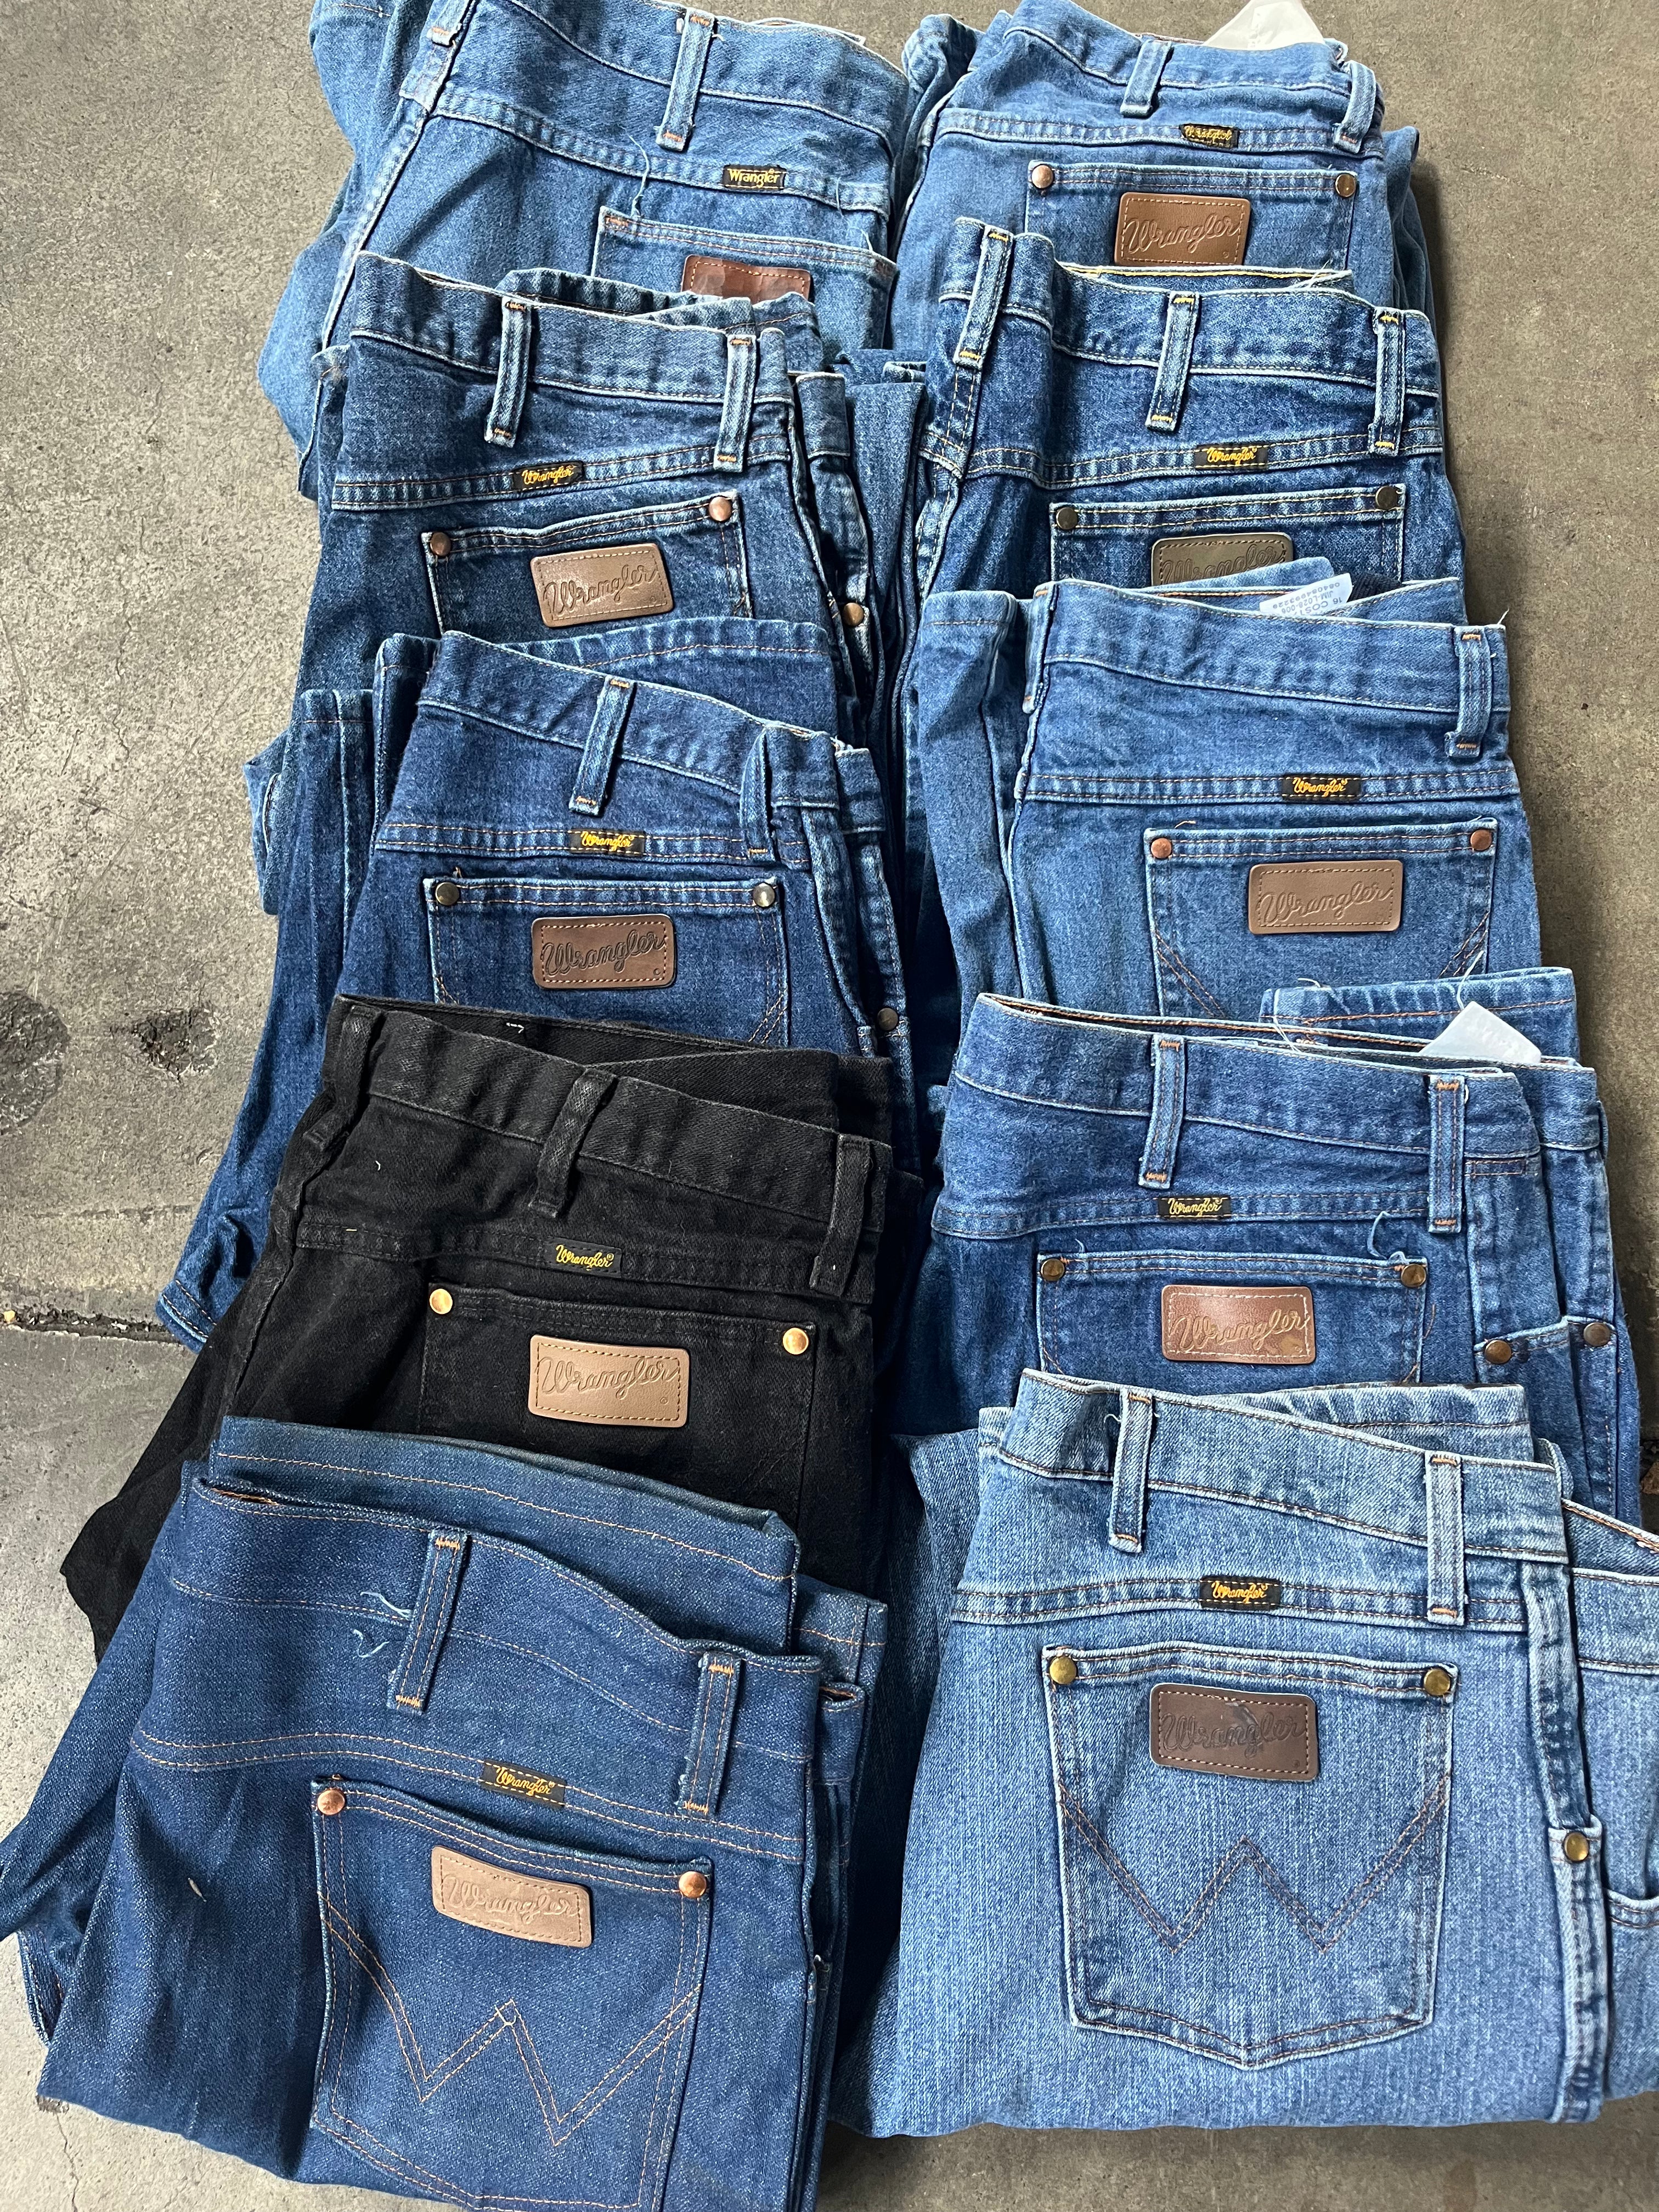 WRANGLER & LEE Jeans for women and men wholesale